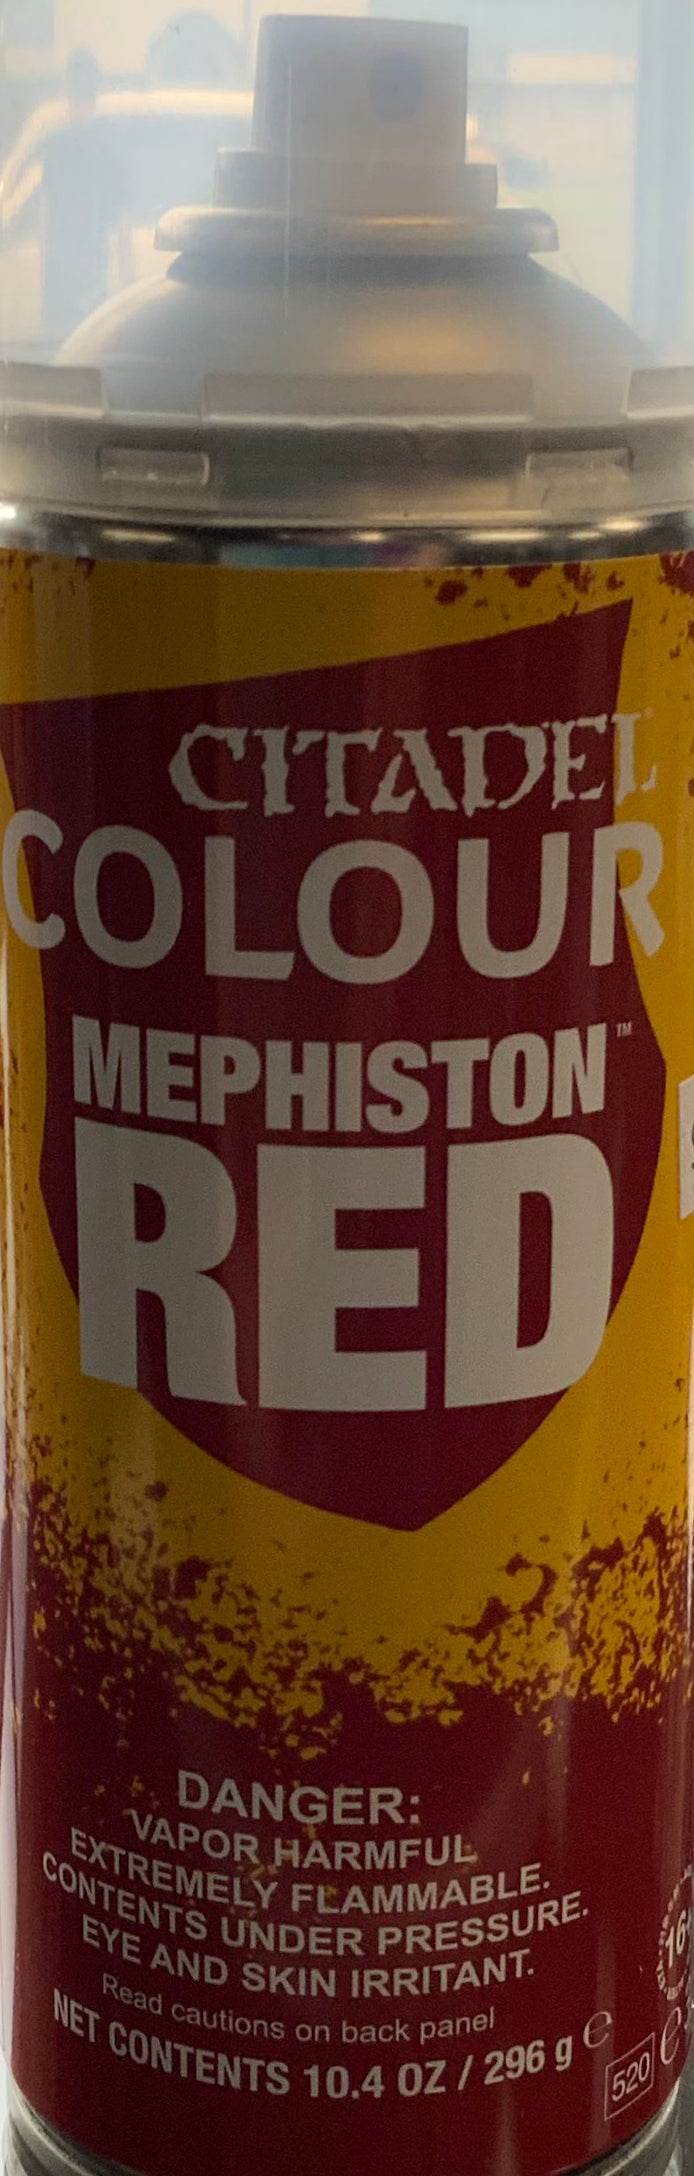 Citadel Colour: Mephiston Red spray paint